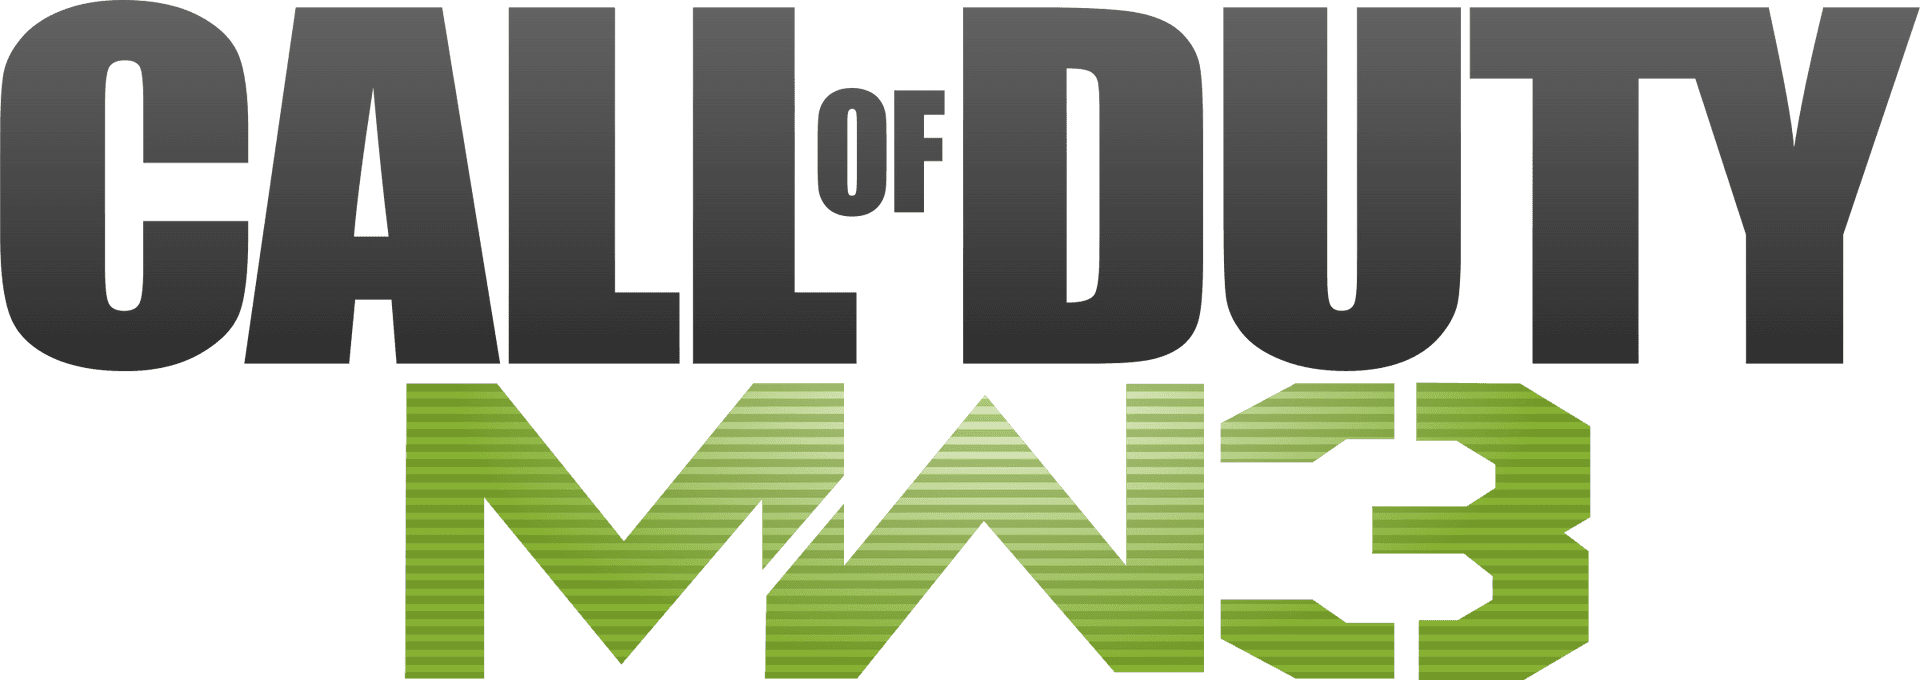 Callof Duty M W3 Logo PNG